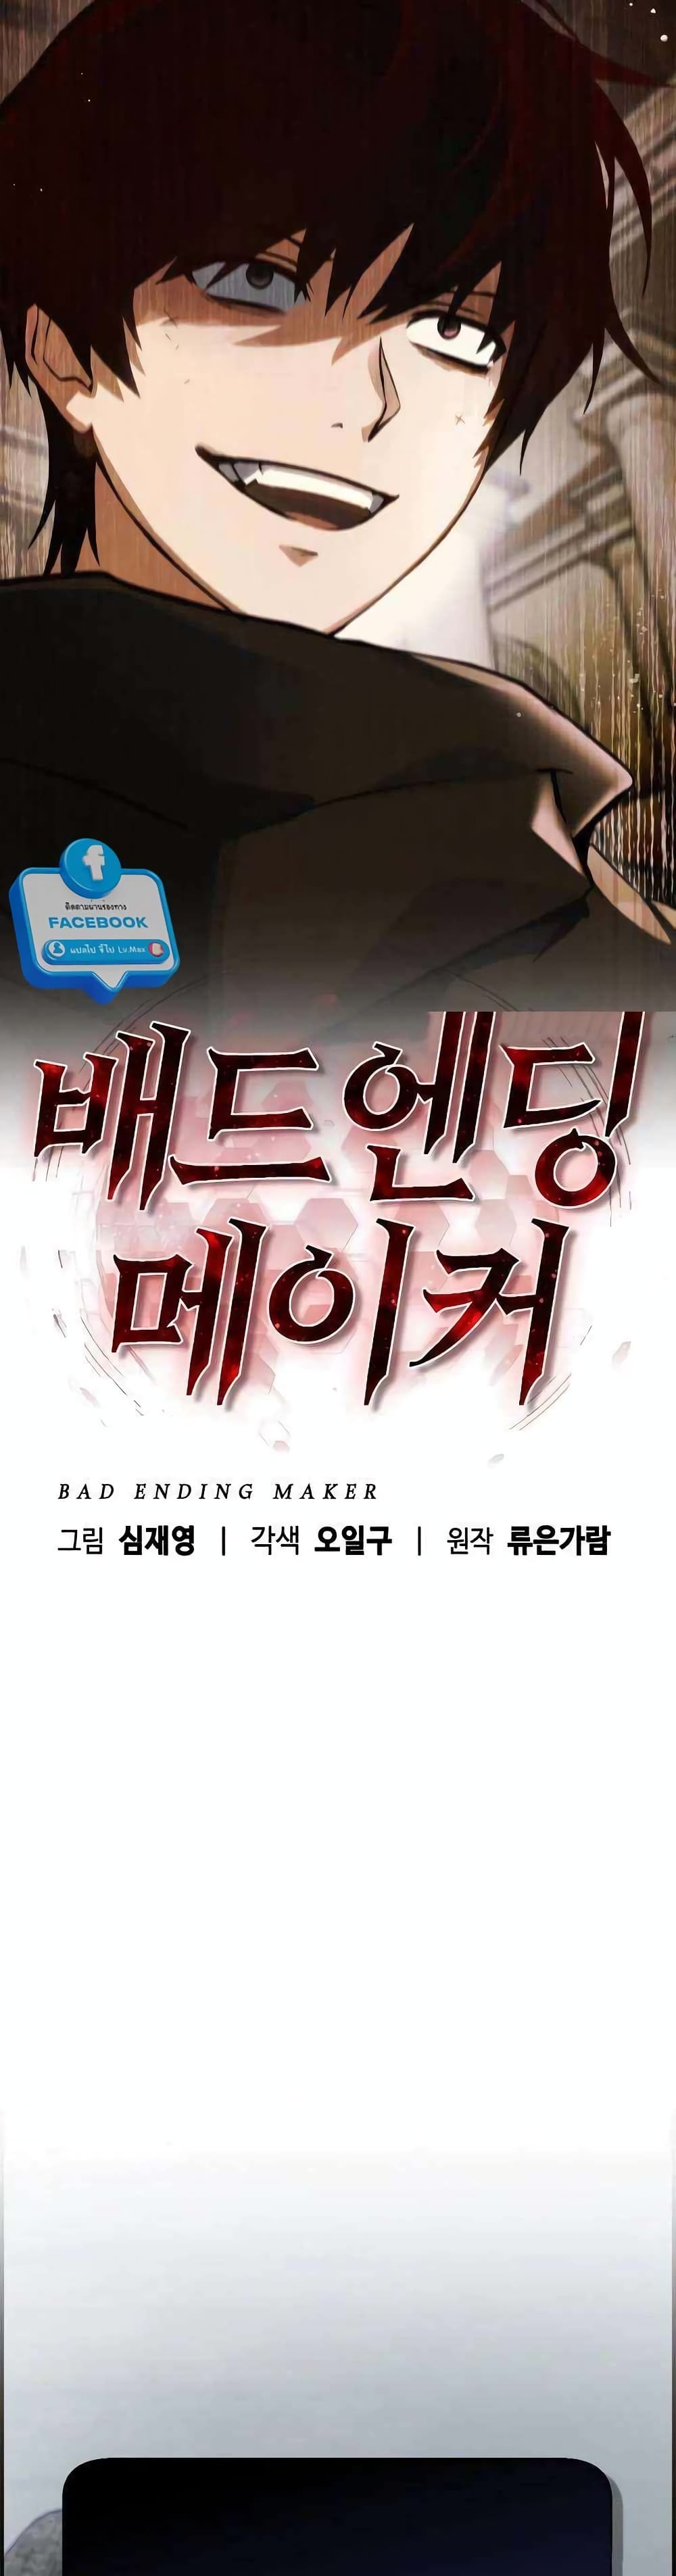 Bad Ending Maker 8-8